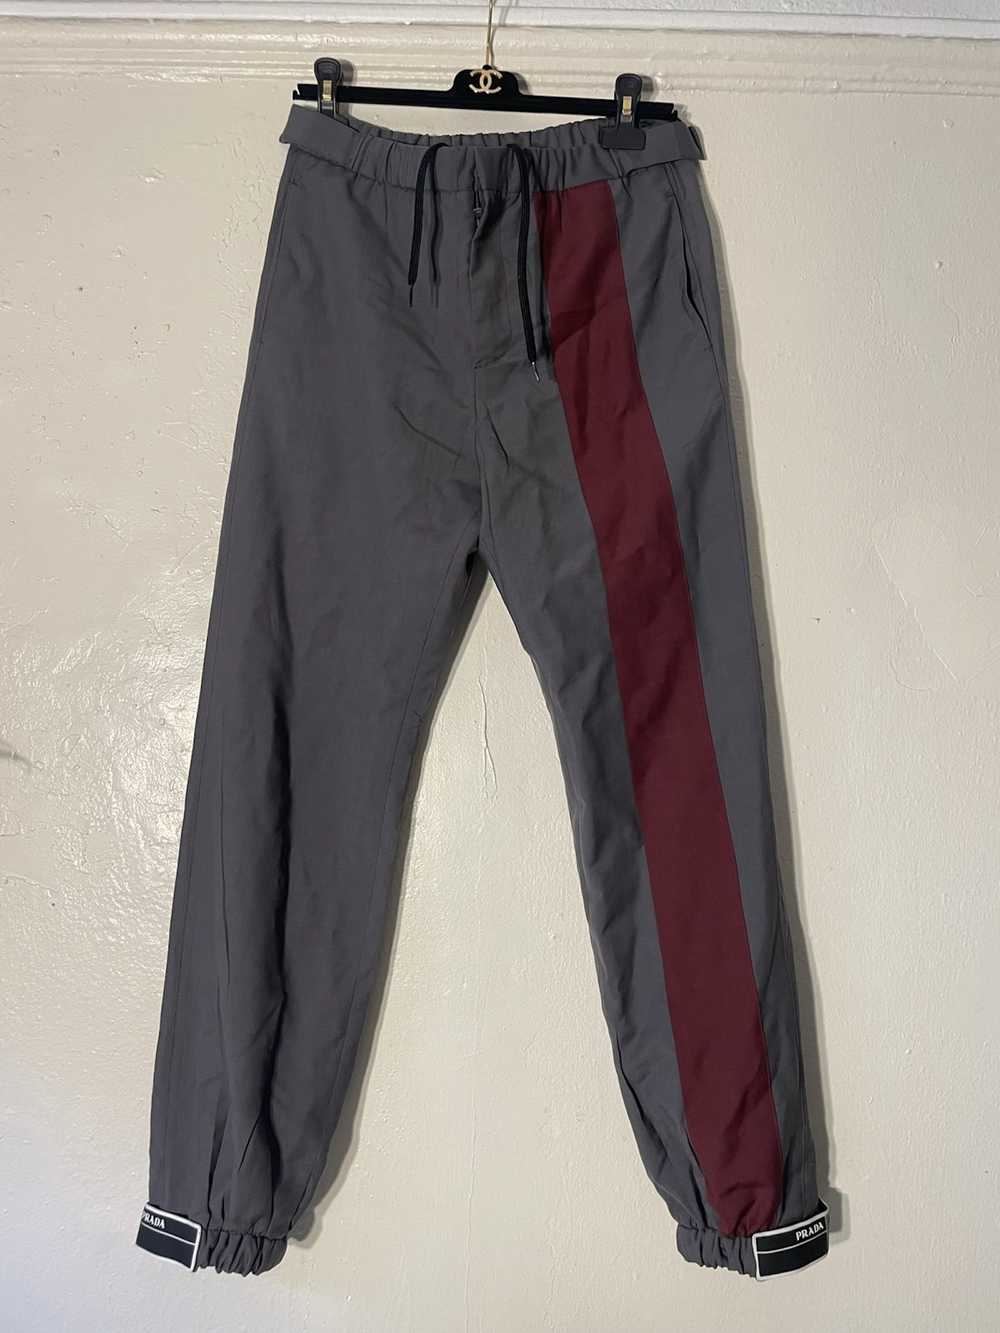 Prada Prada gray ankle strap pants SS2018 - image 1